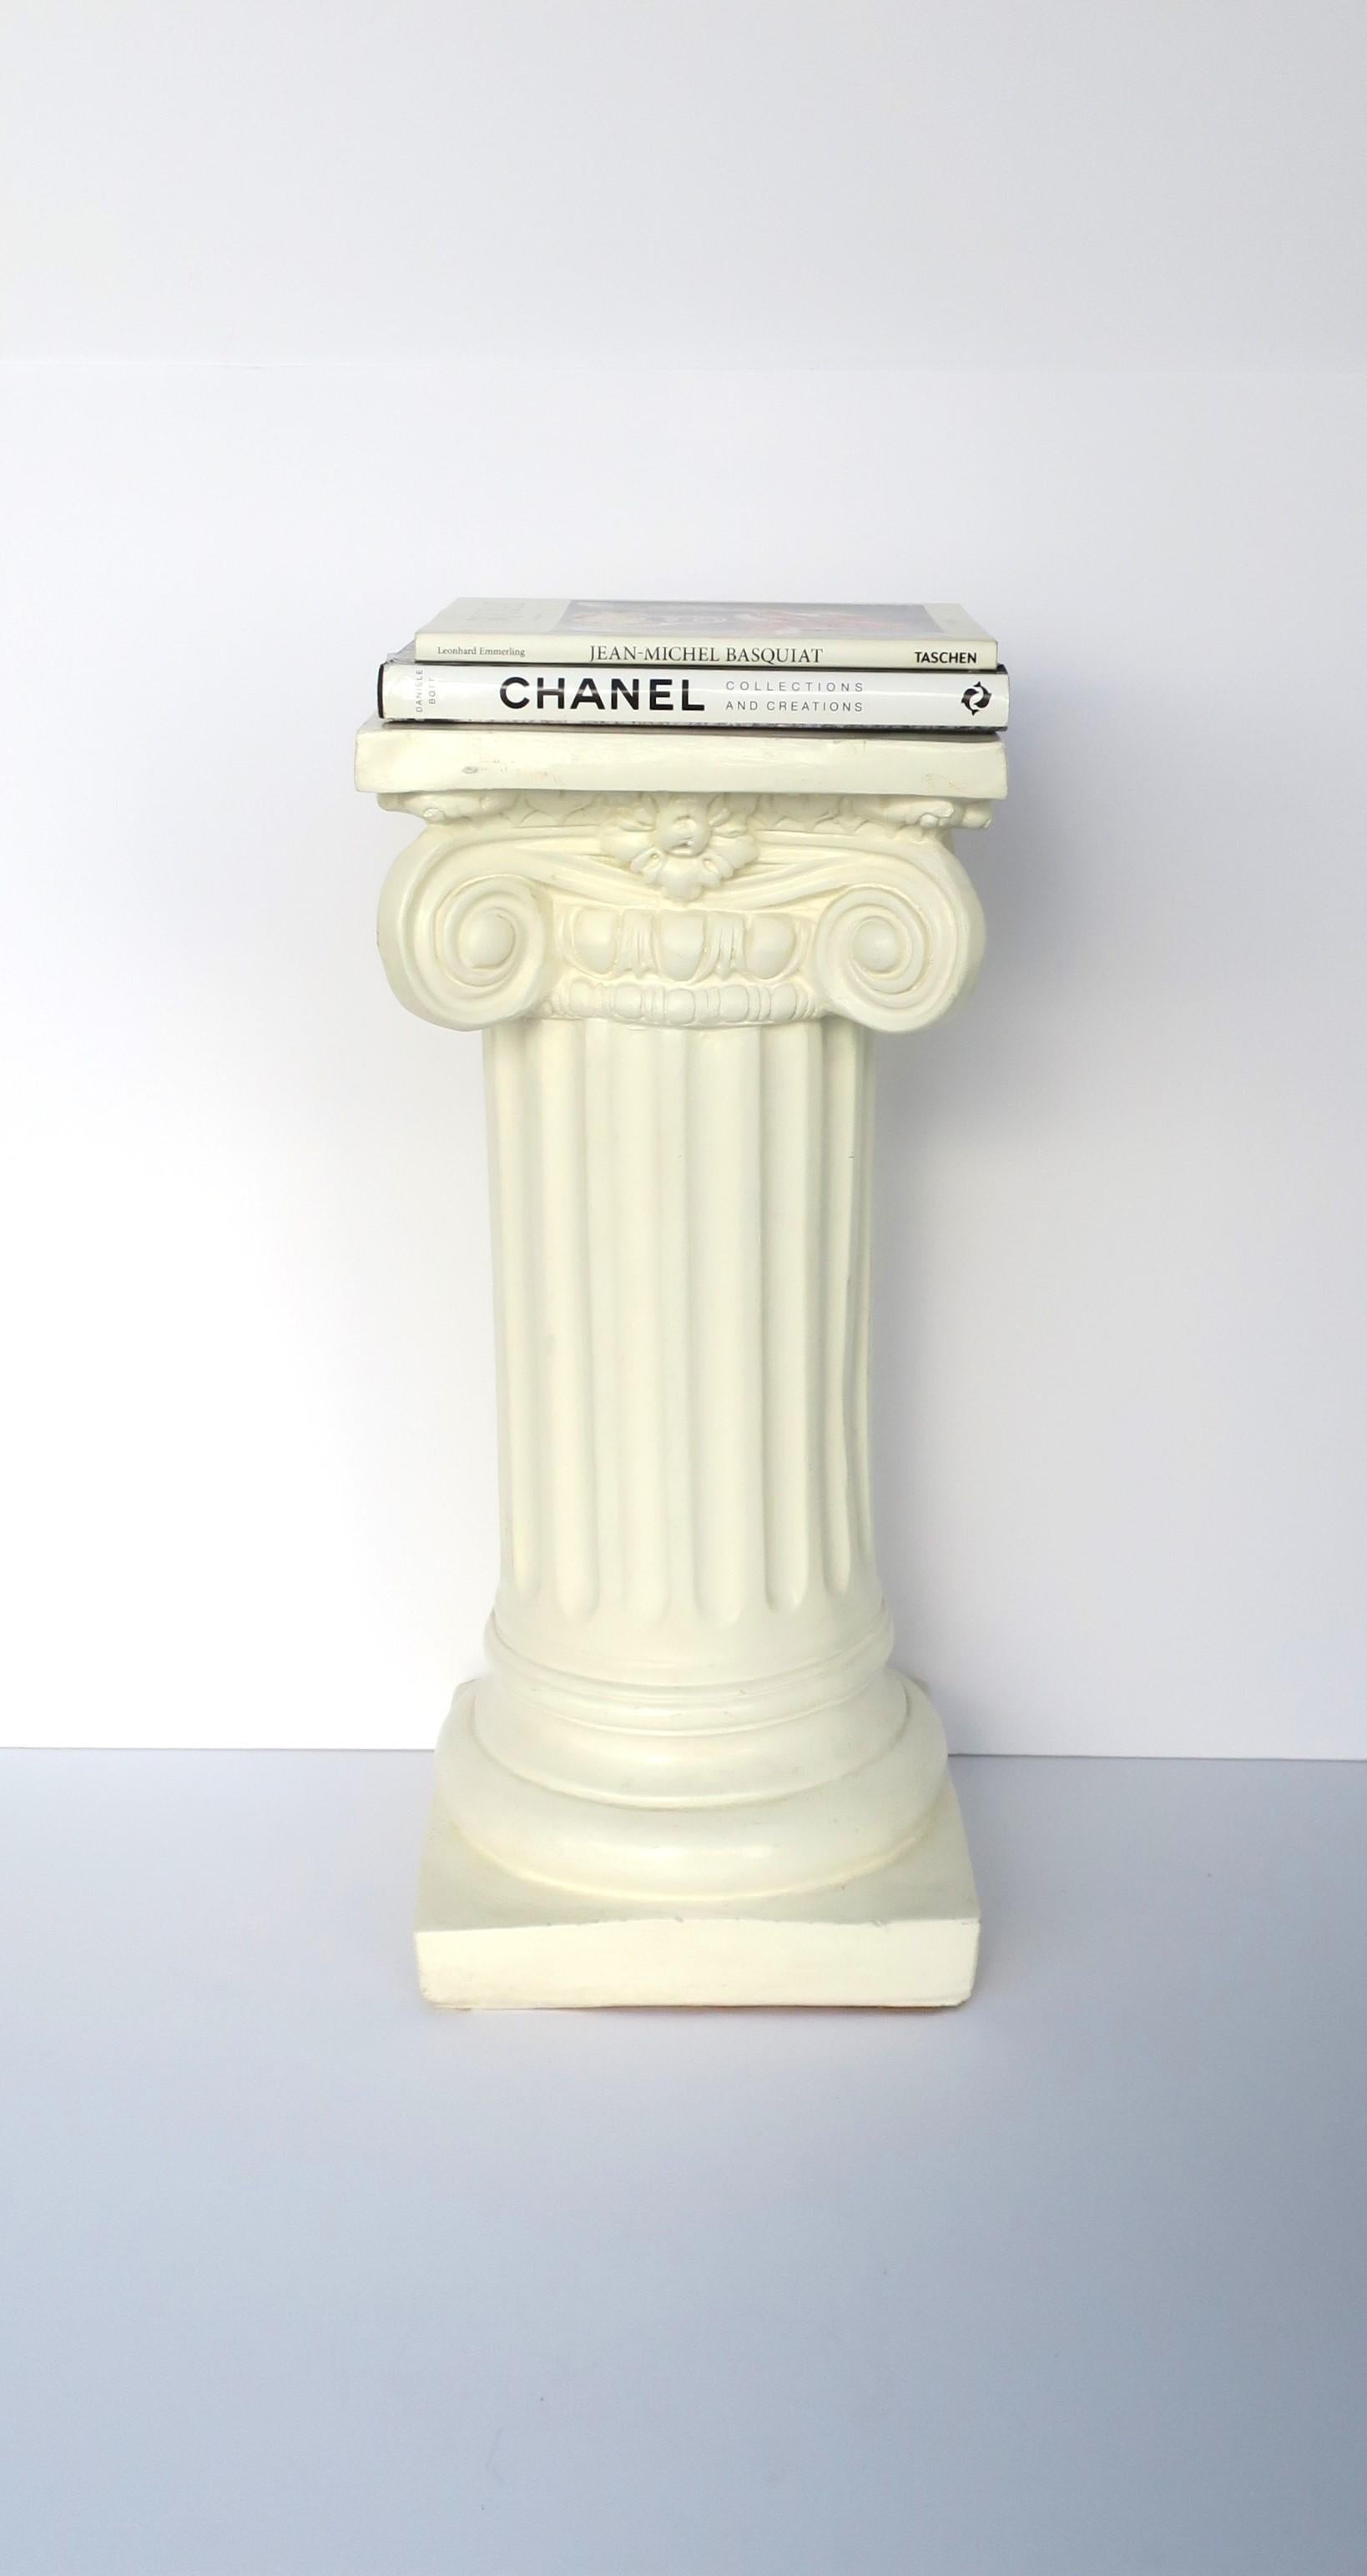 column pedestal design